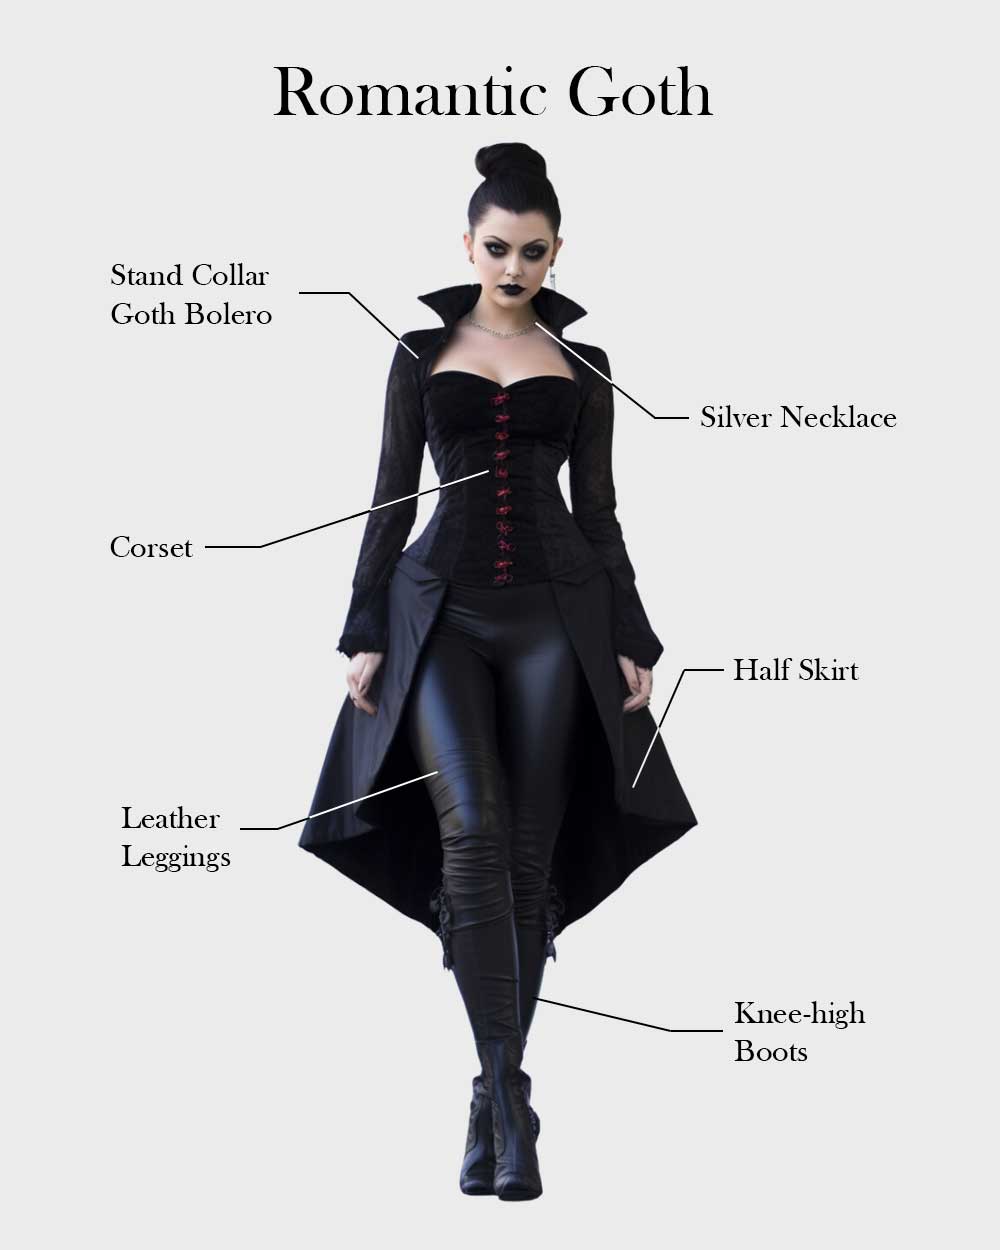 Female Romantic Goth fashion style